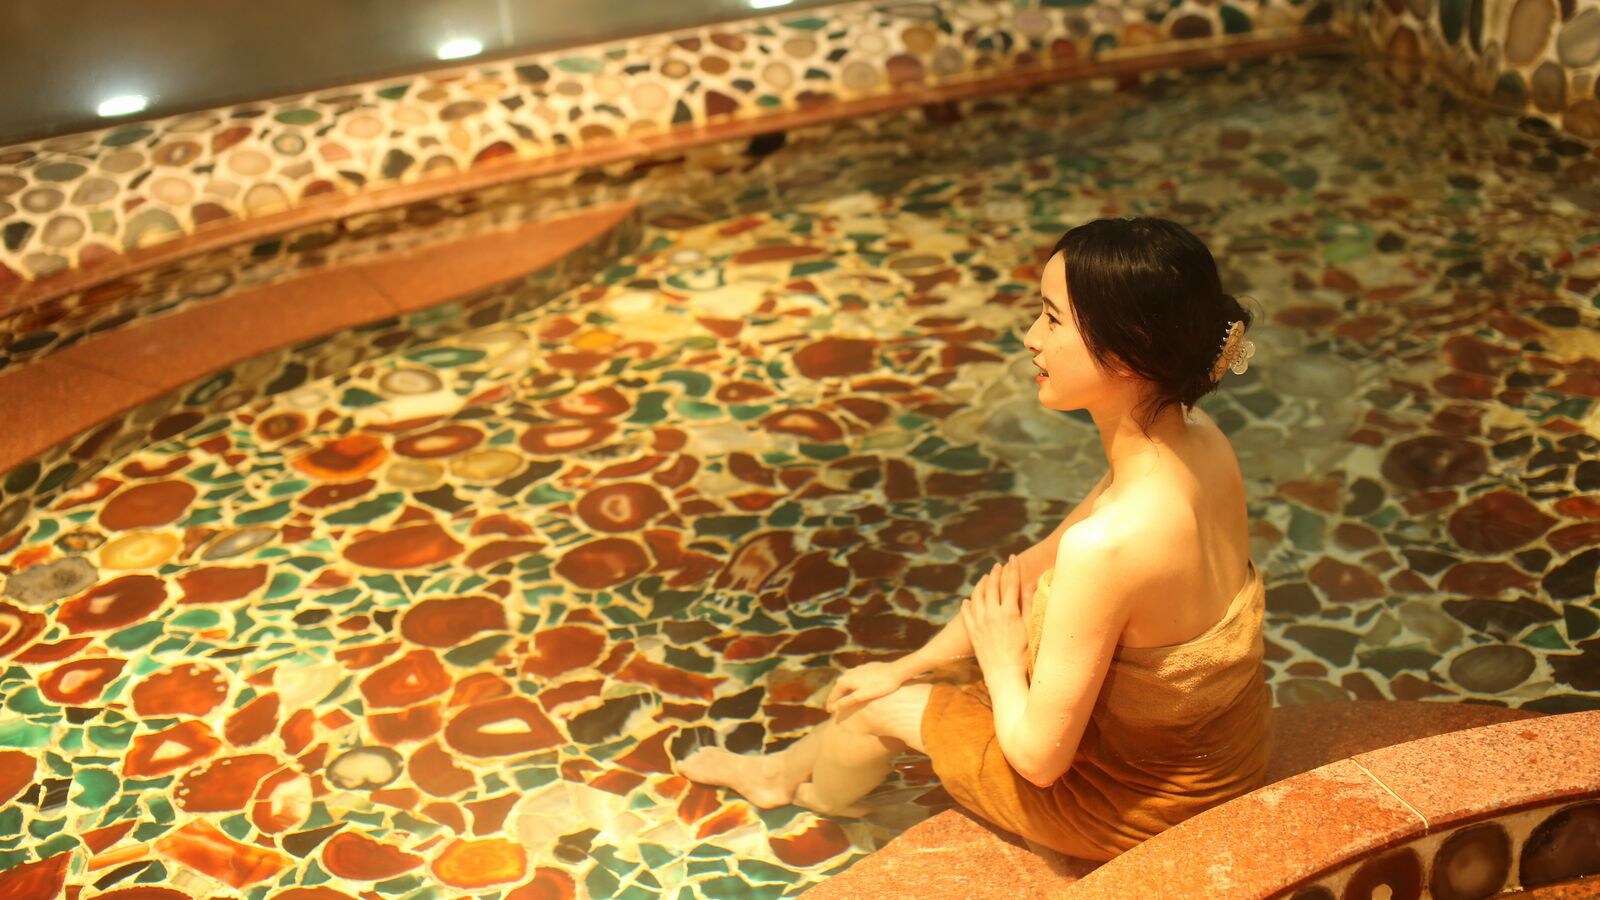 Goddess hot water "Agate bath"